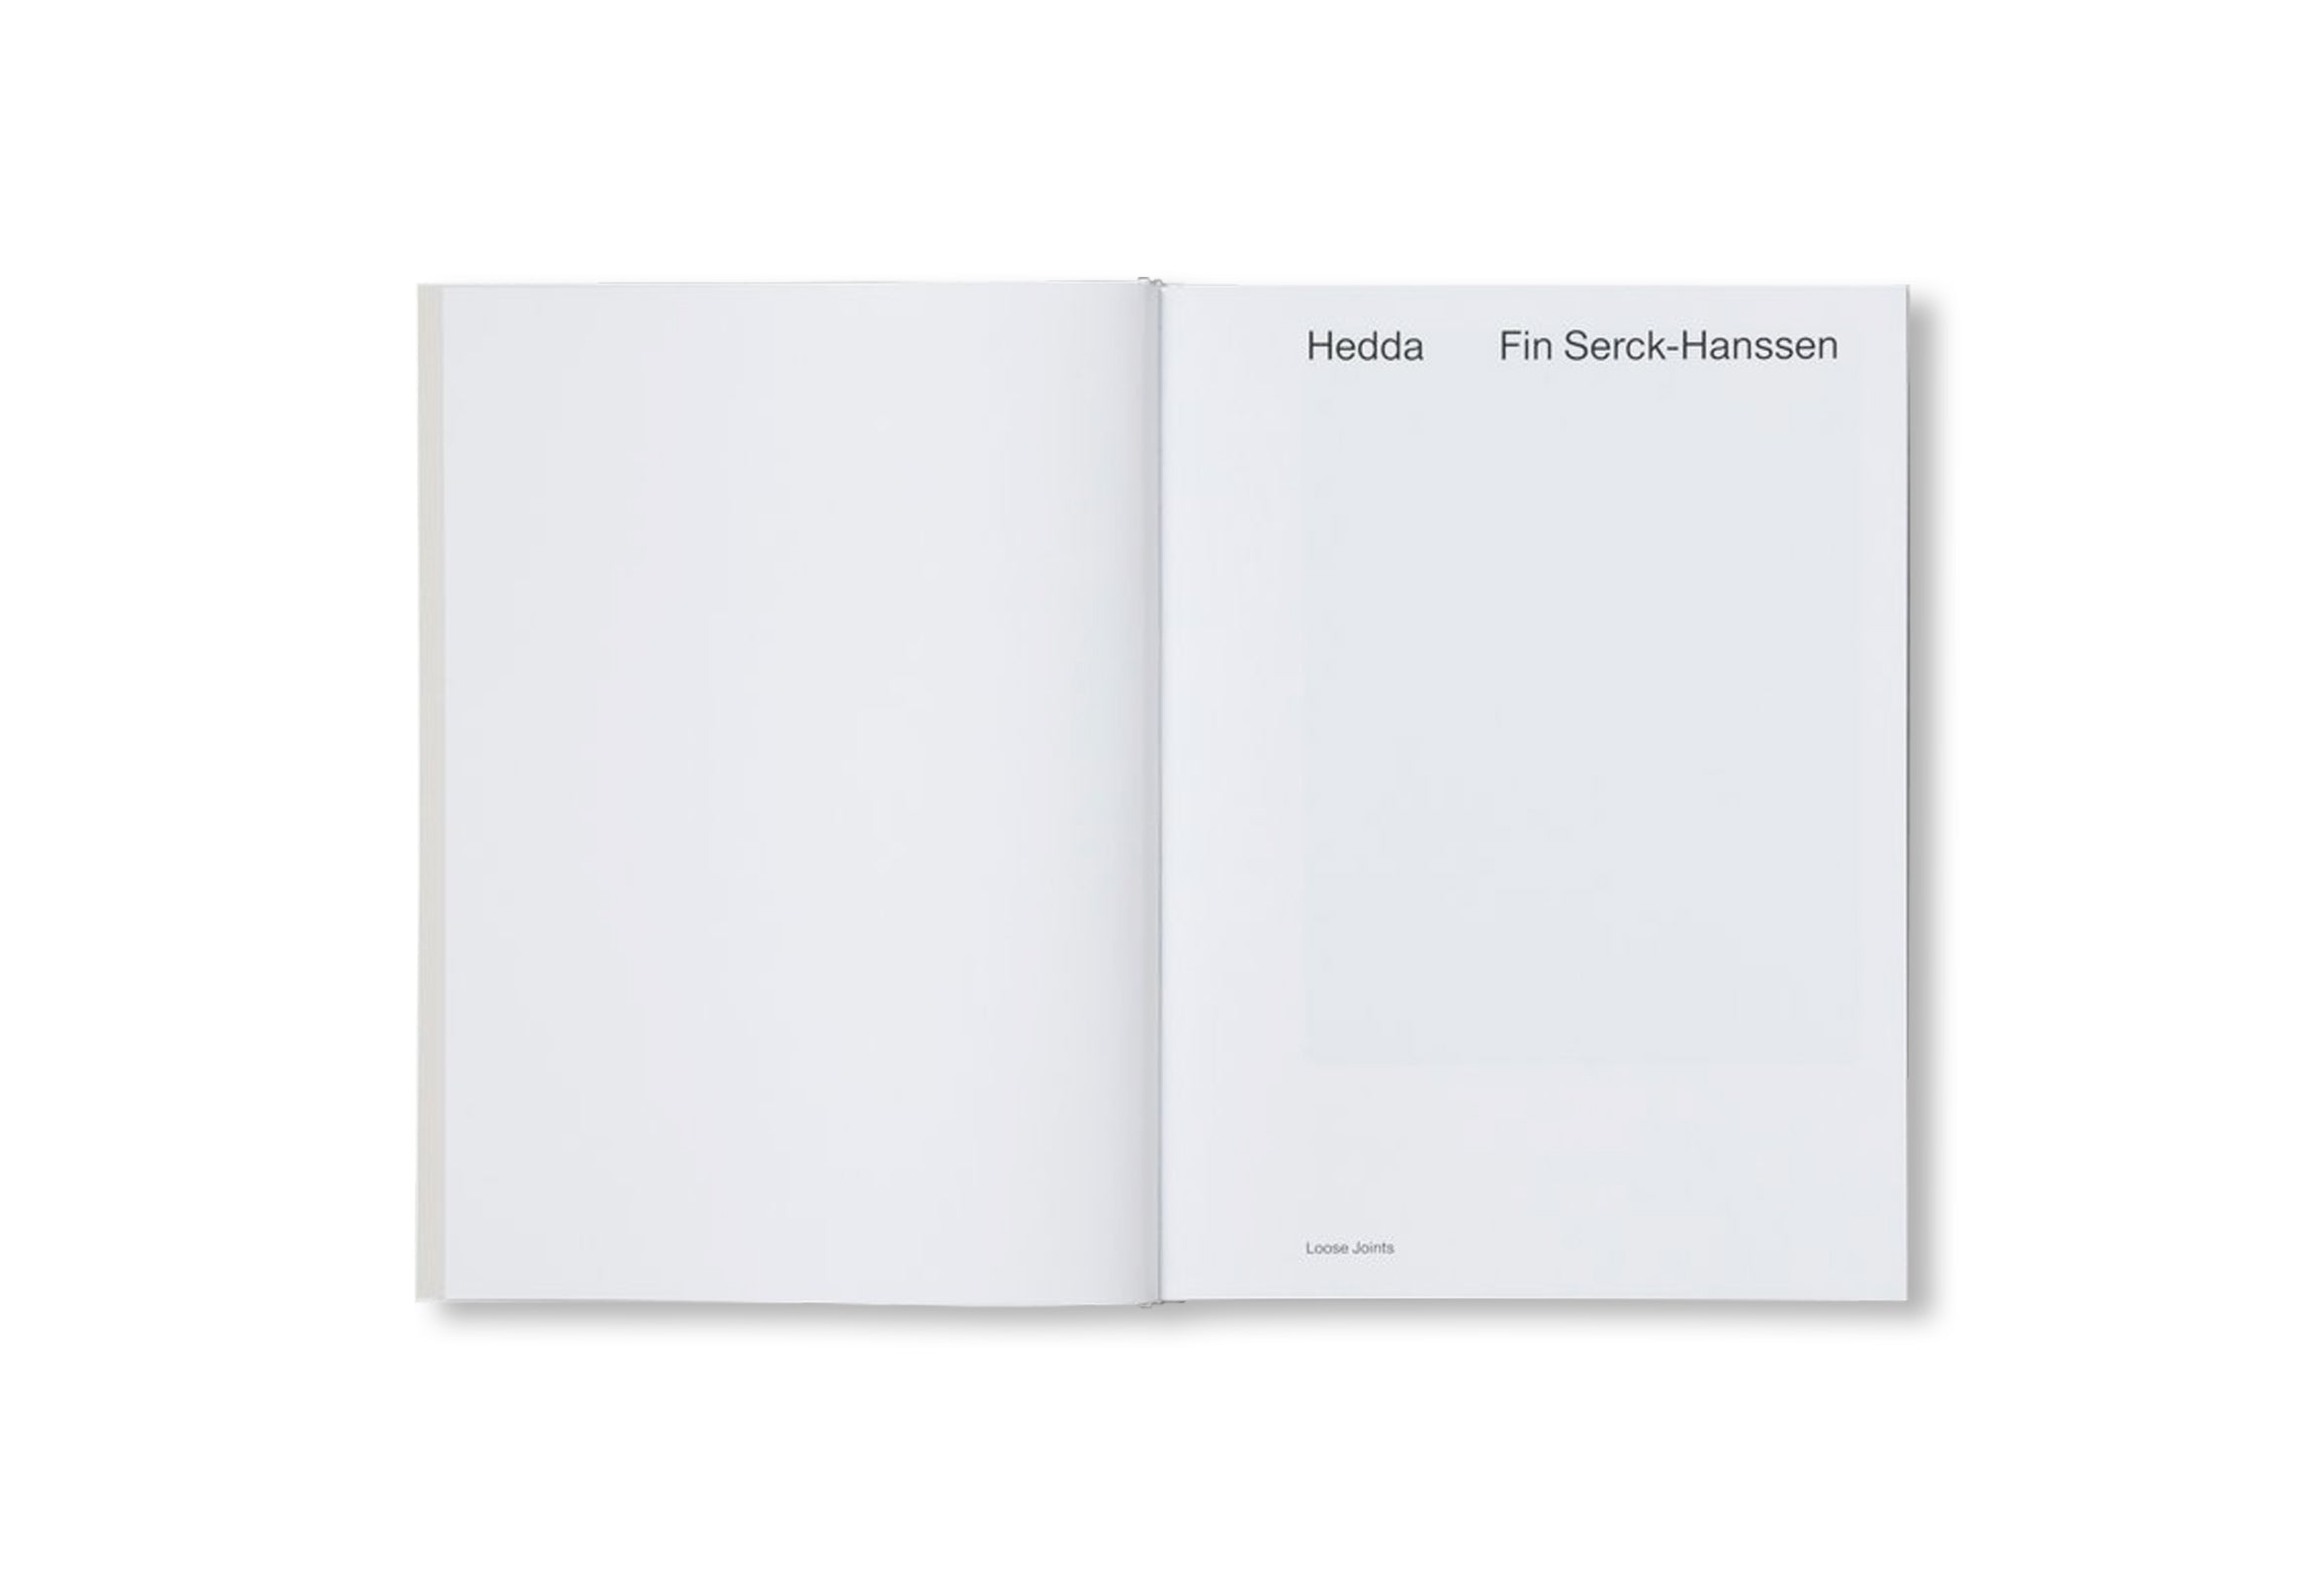 HEDDA by Fin Serck-Hanssen